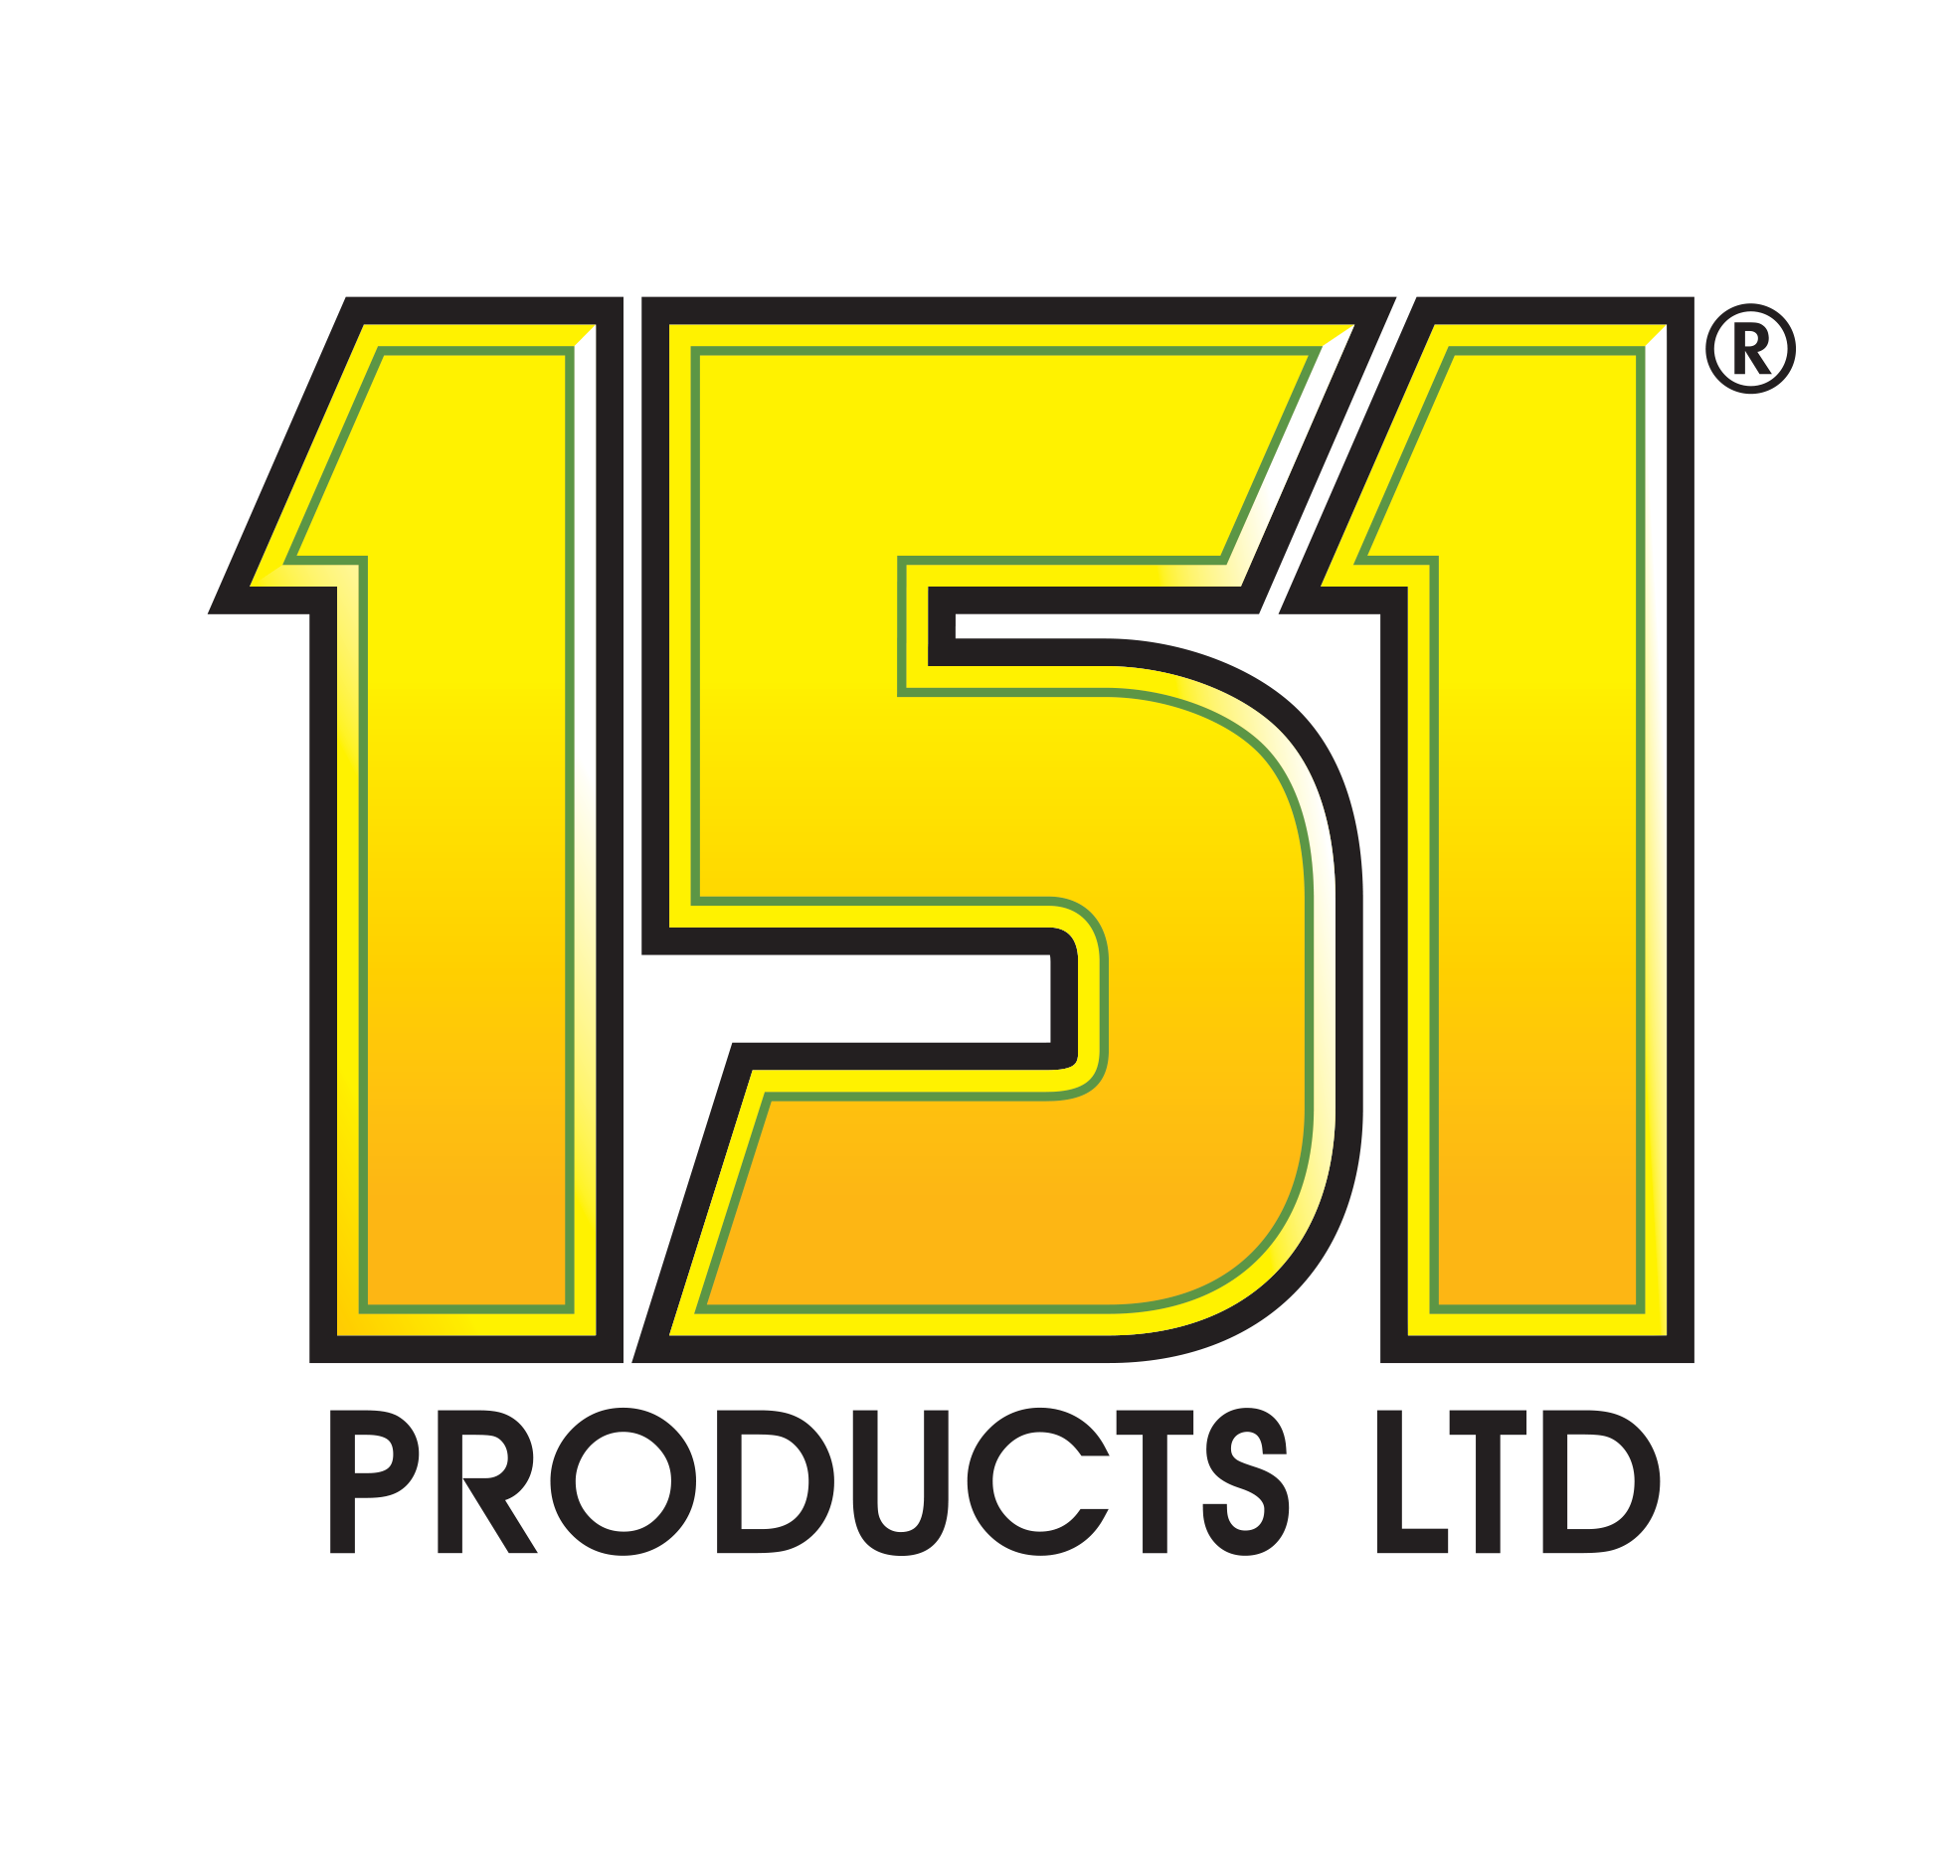 151-logo